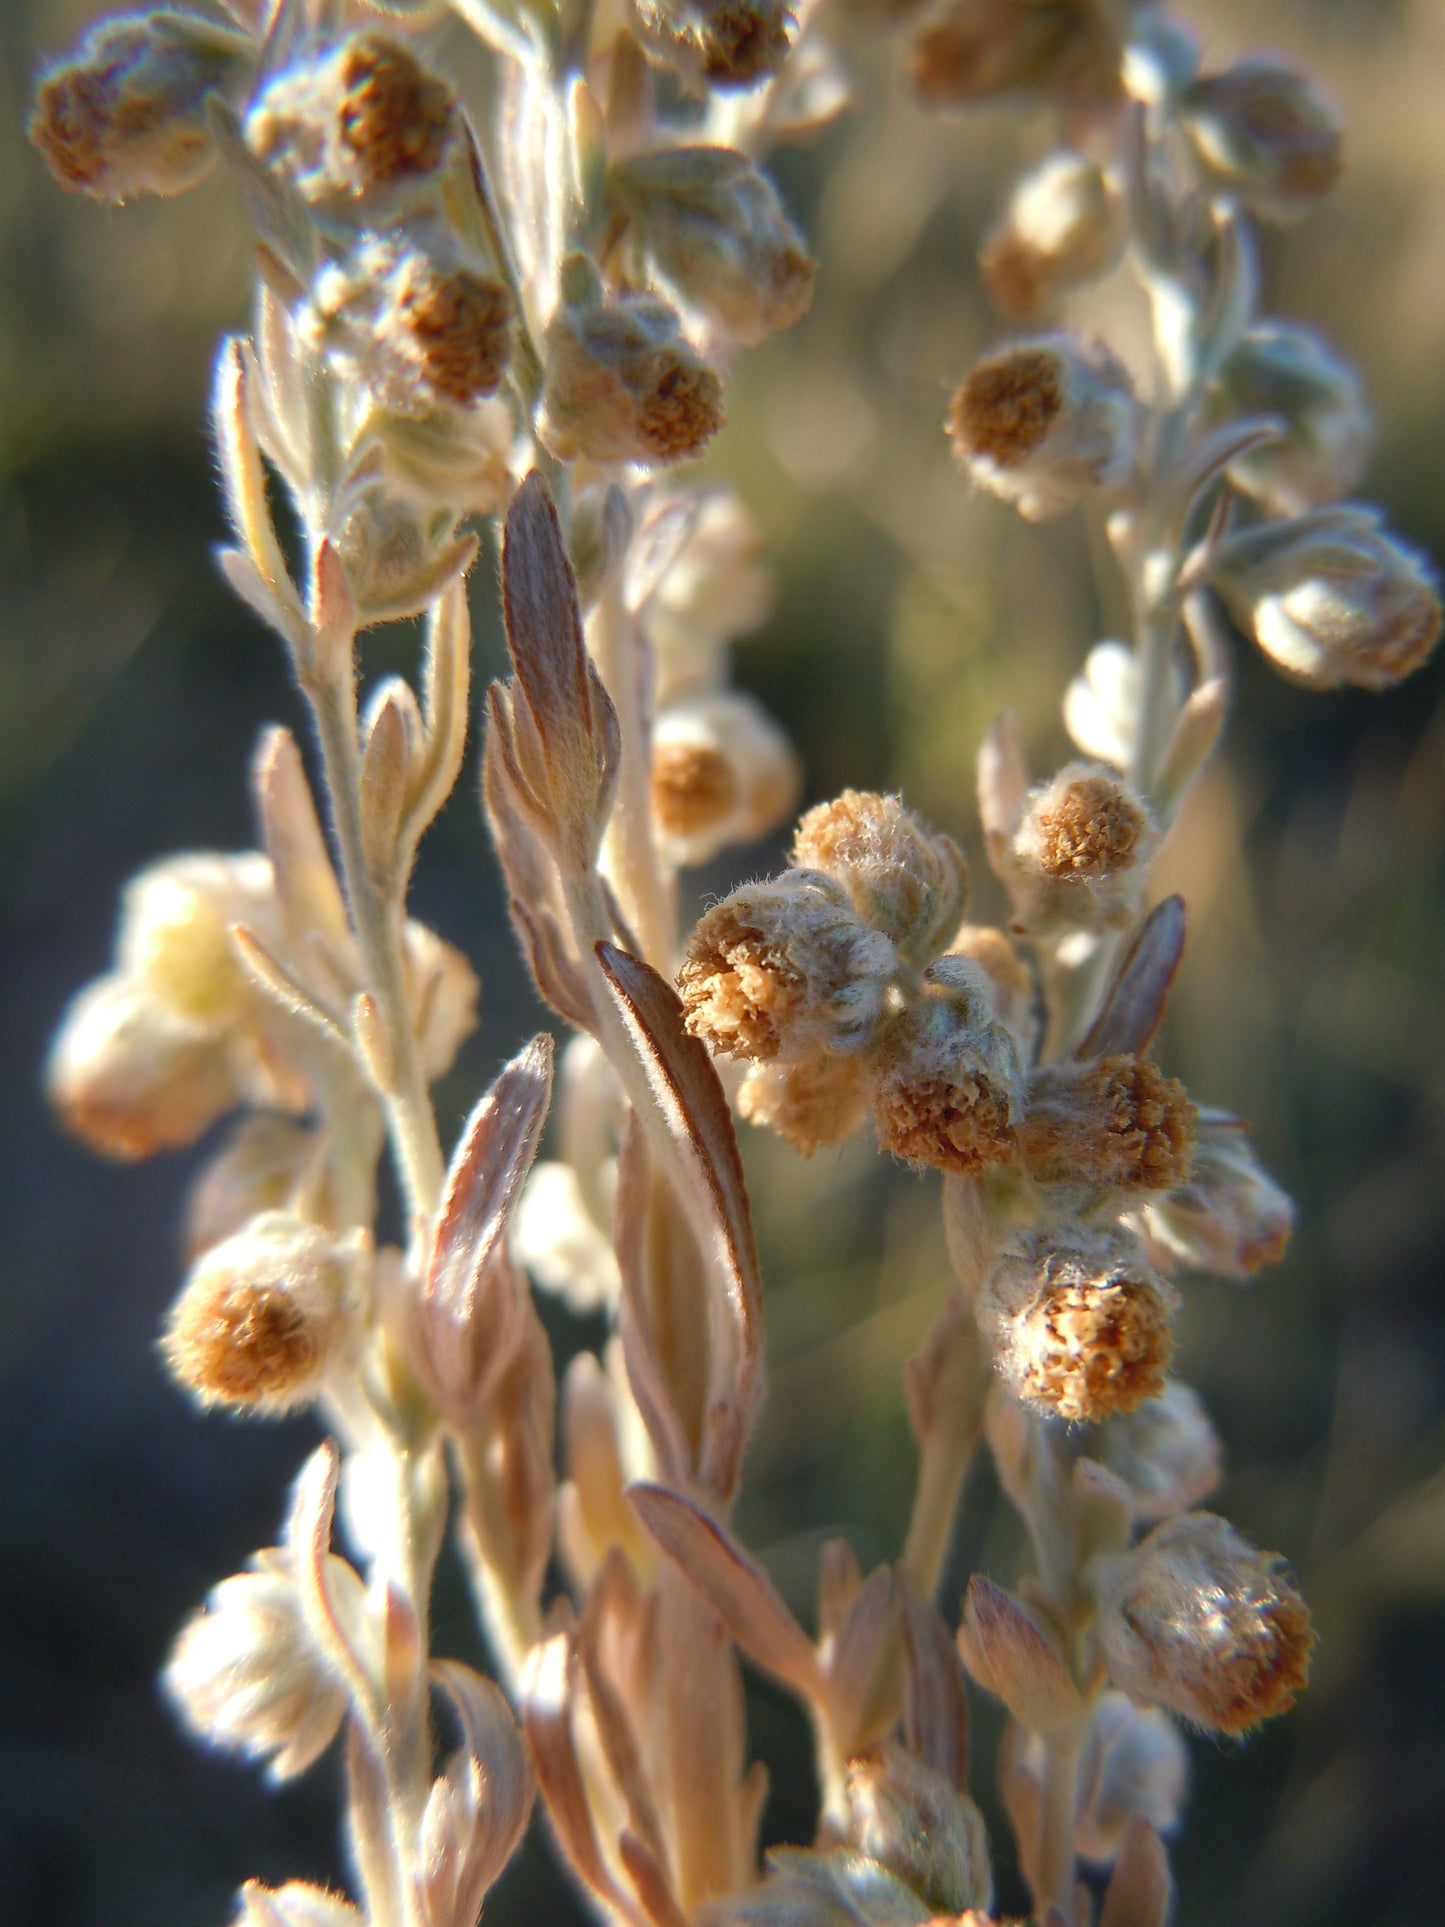 Fringed Sagewort (Artemisia frigida)